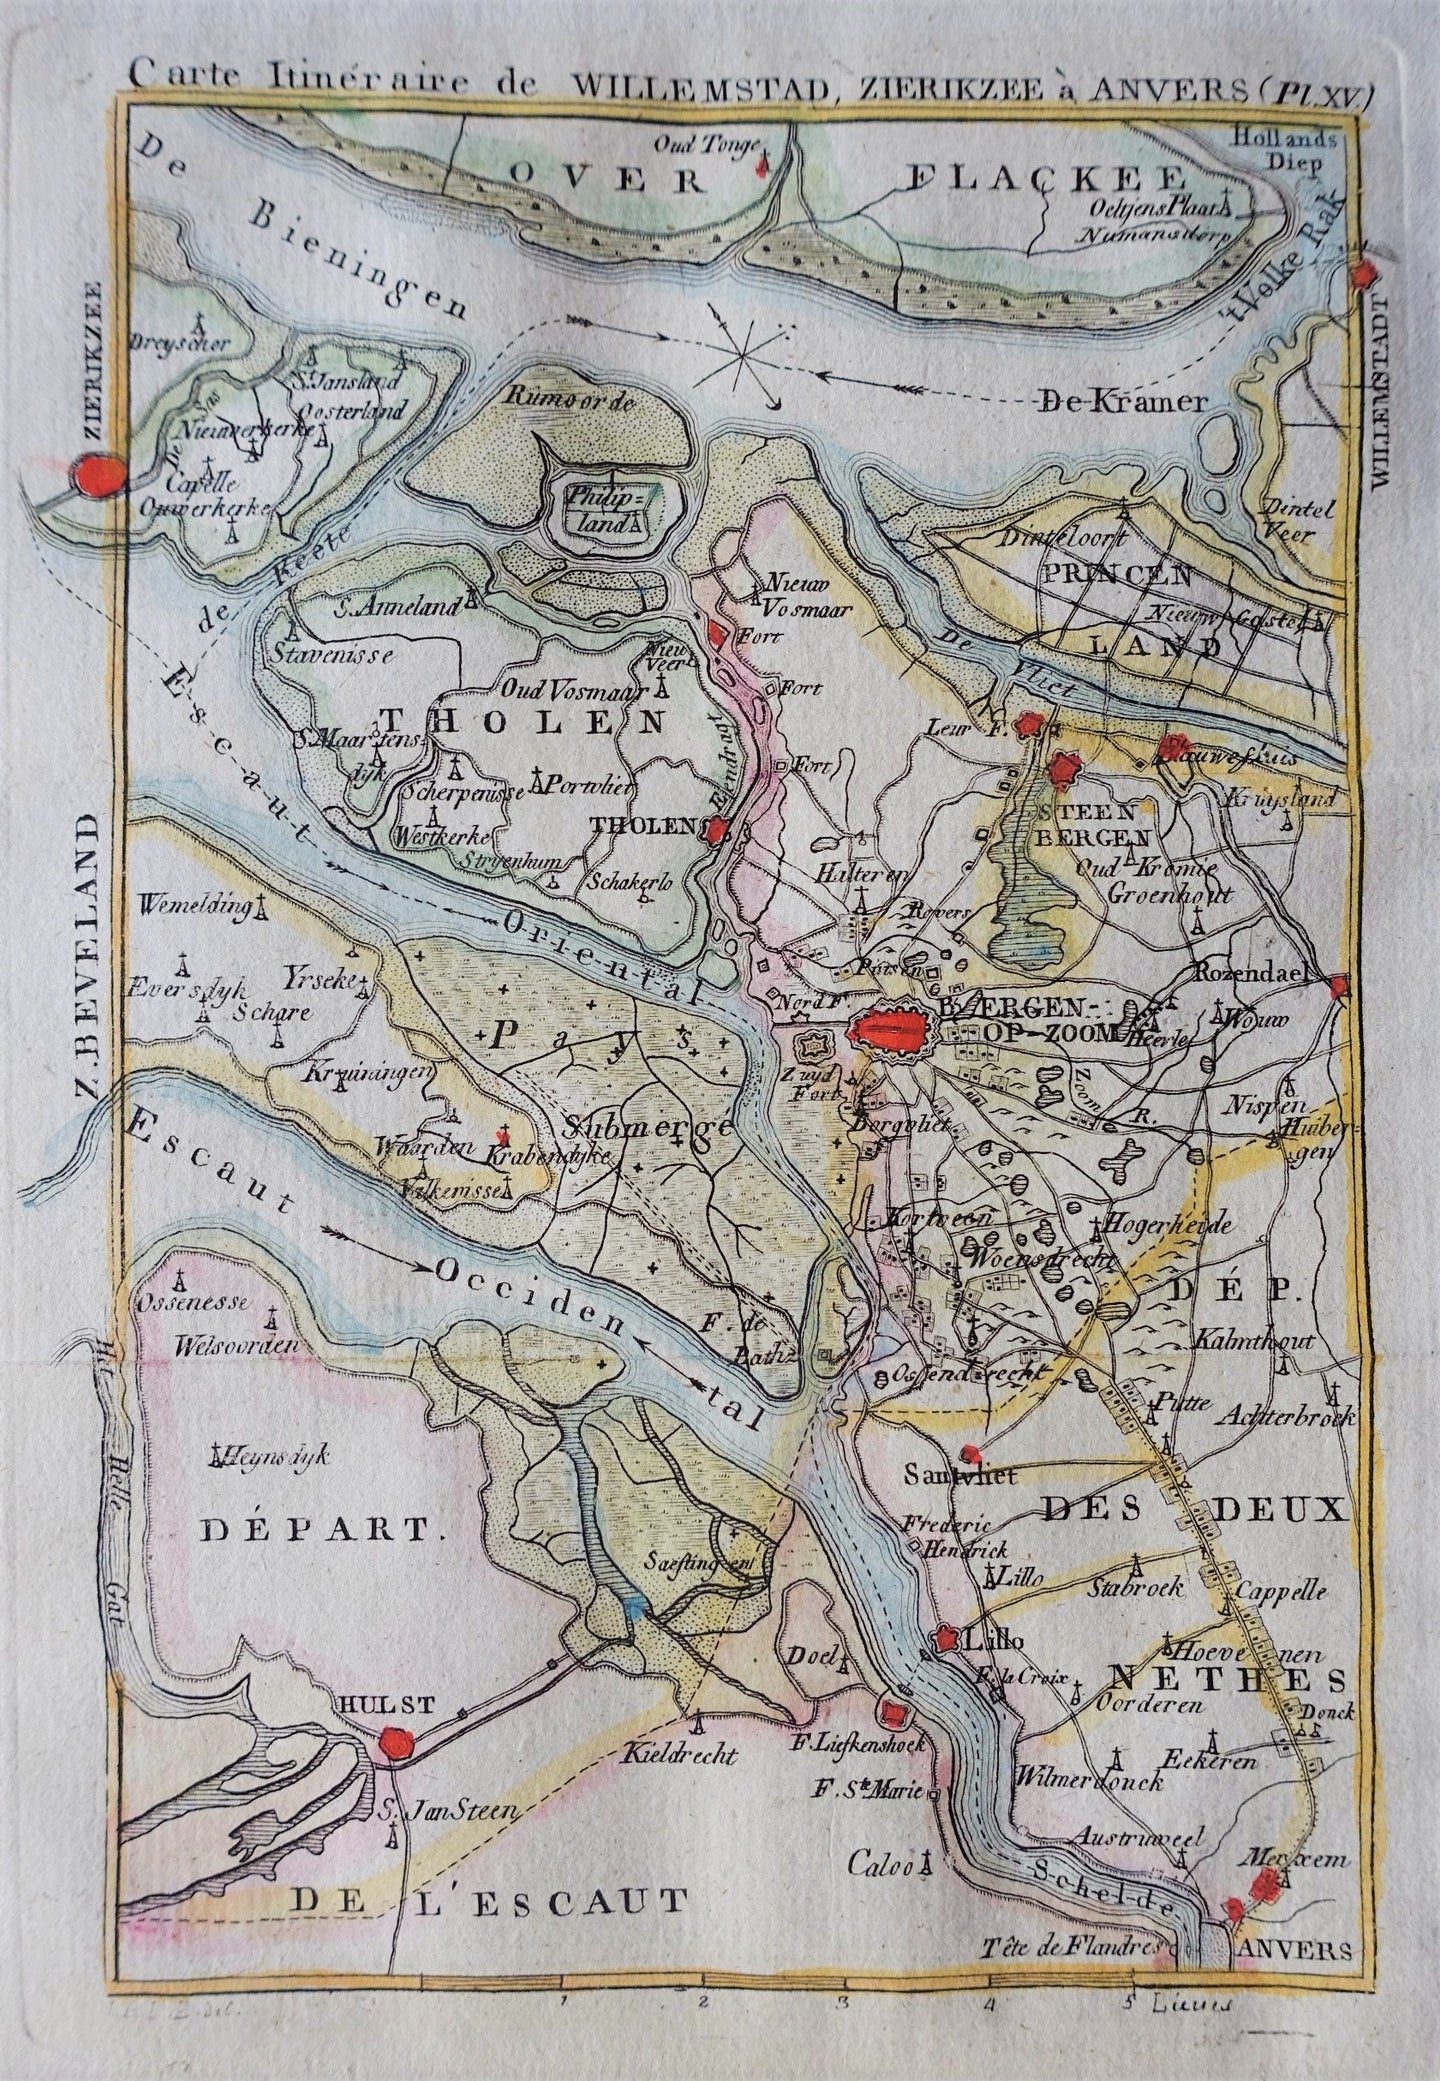 Brabant Bergen op Zoom en omgeving - LAC Hesse - 1807